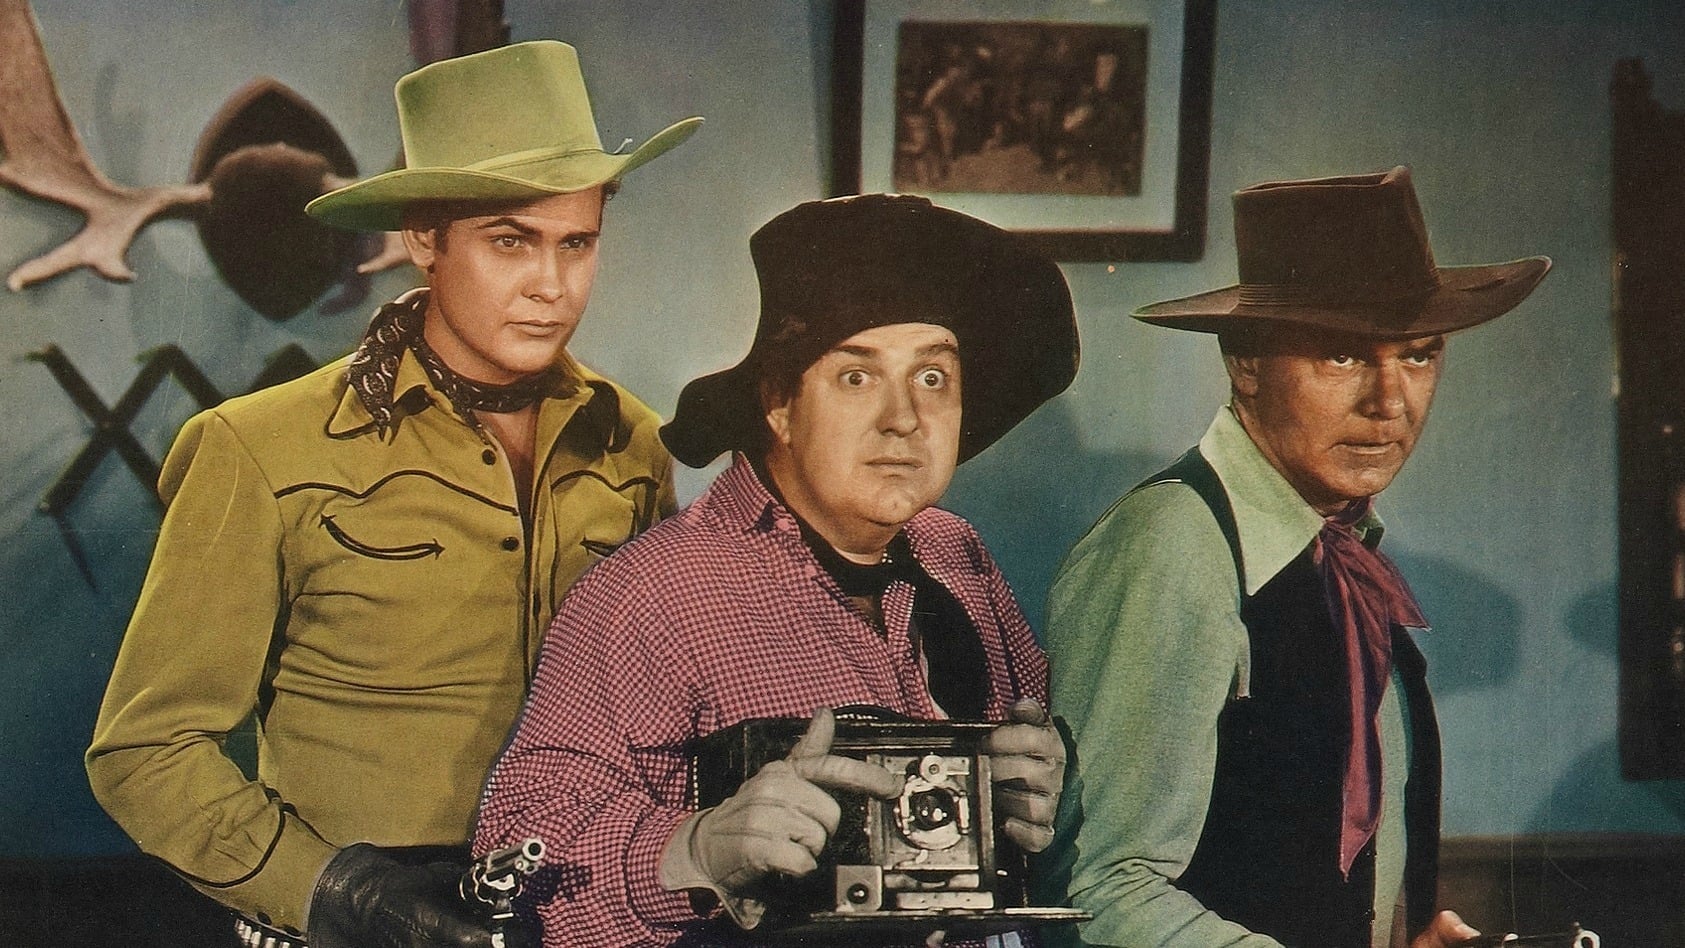 Code of the Prairie (1944)